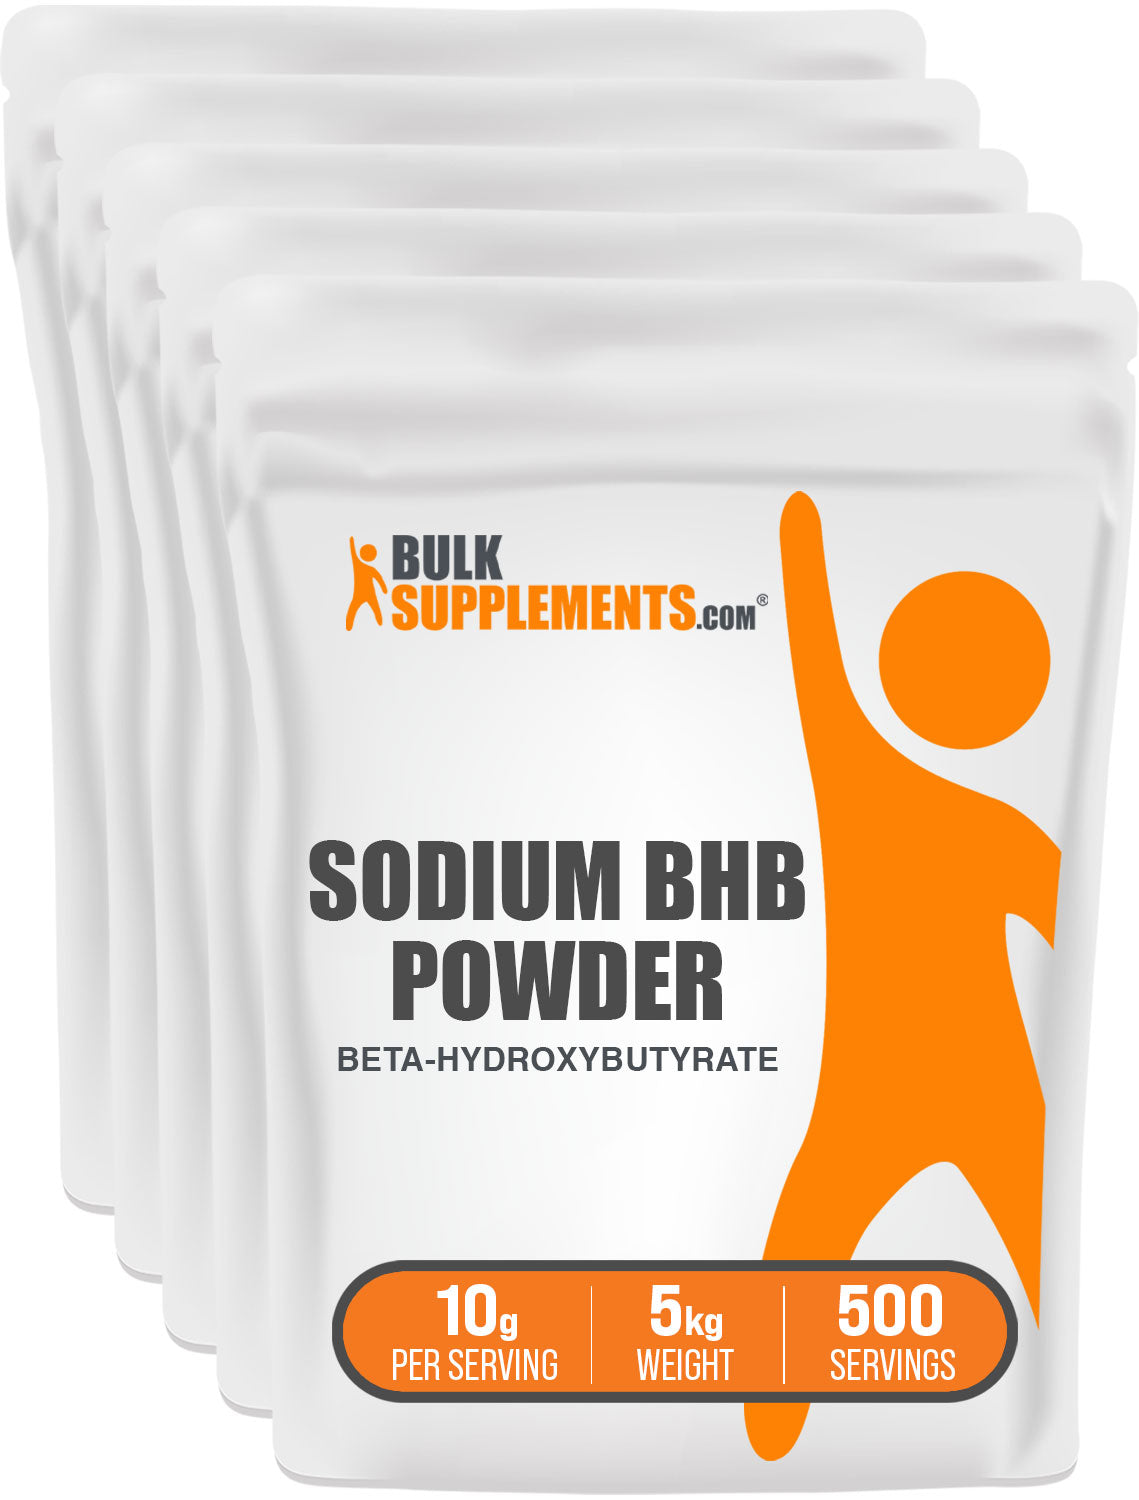 5kg sodium keto bhb